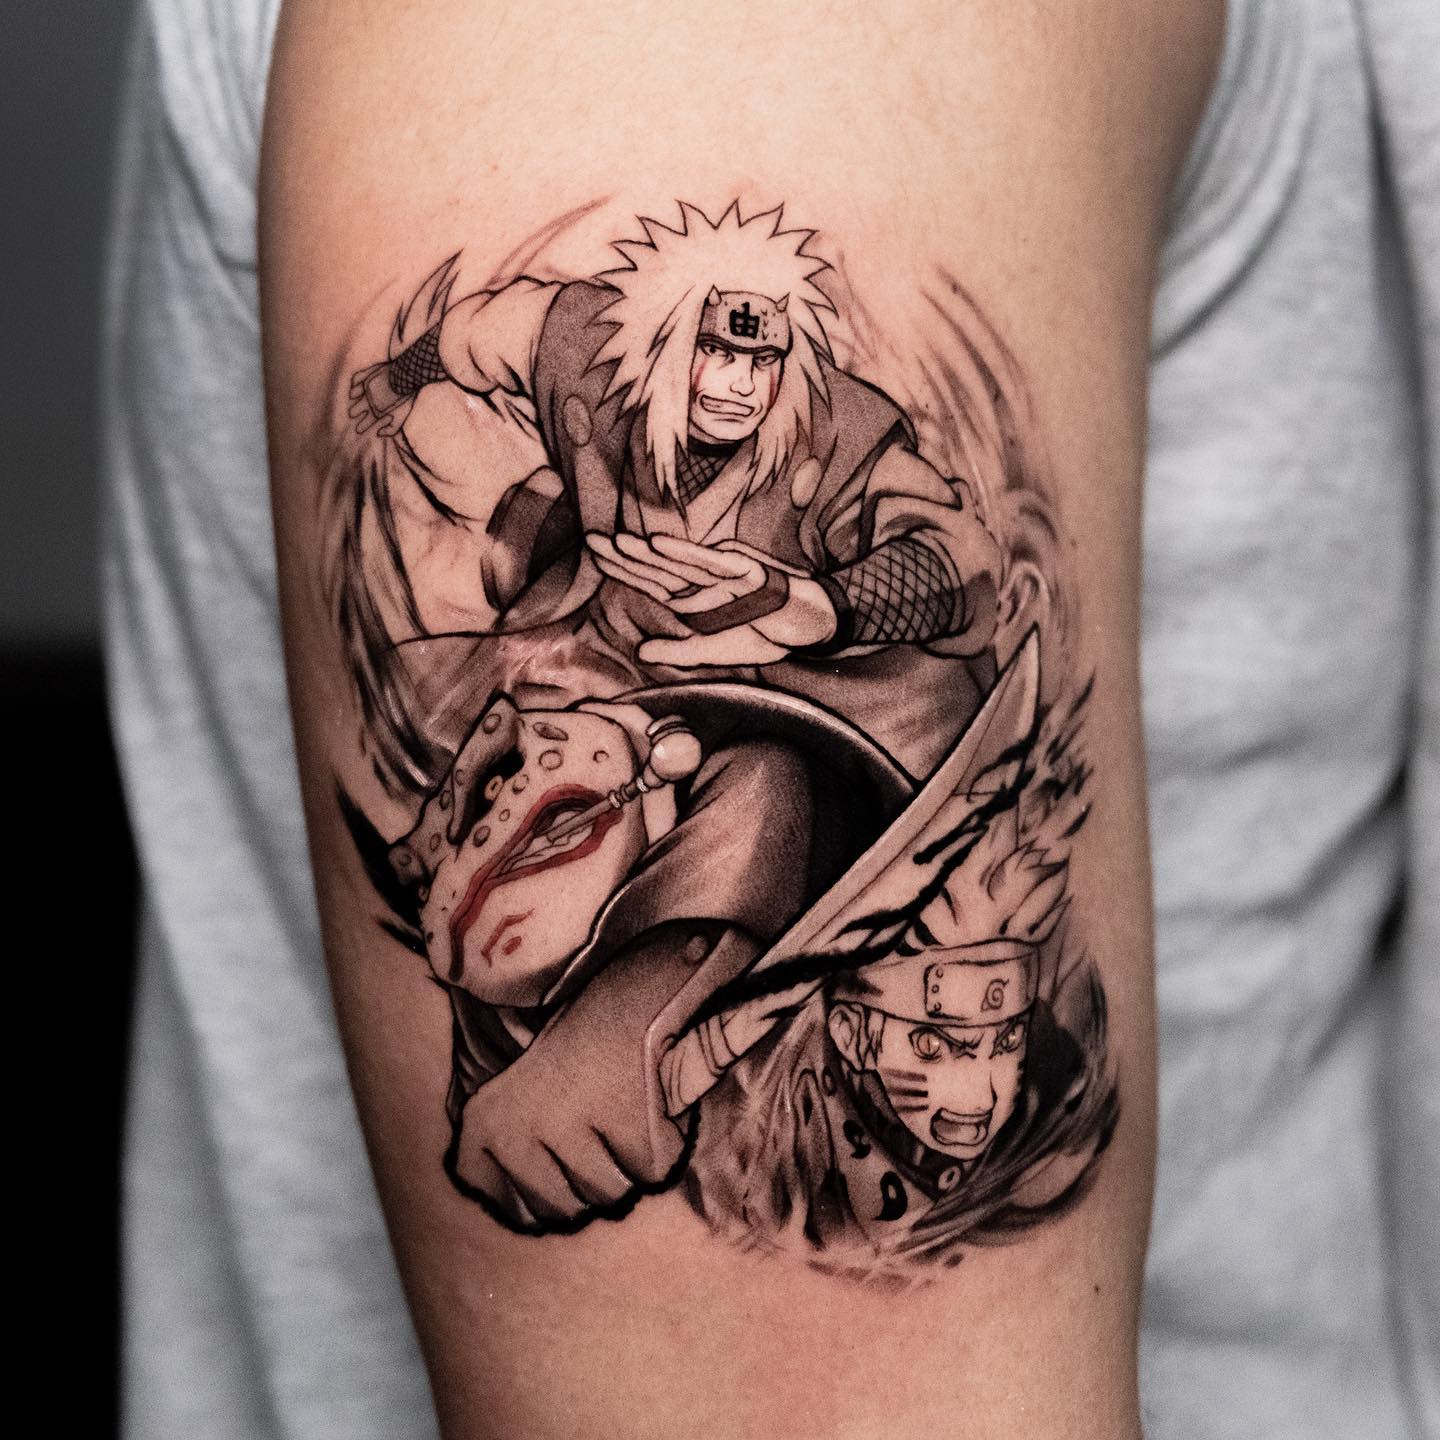 Naruto arm tattoo from Akos Keller by onedaytattoos on DeviantArt